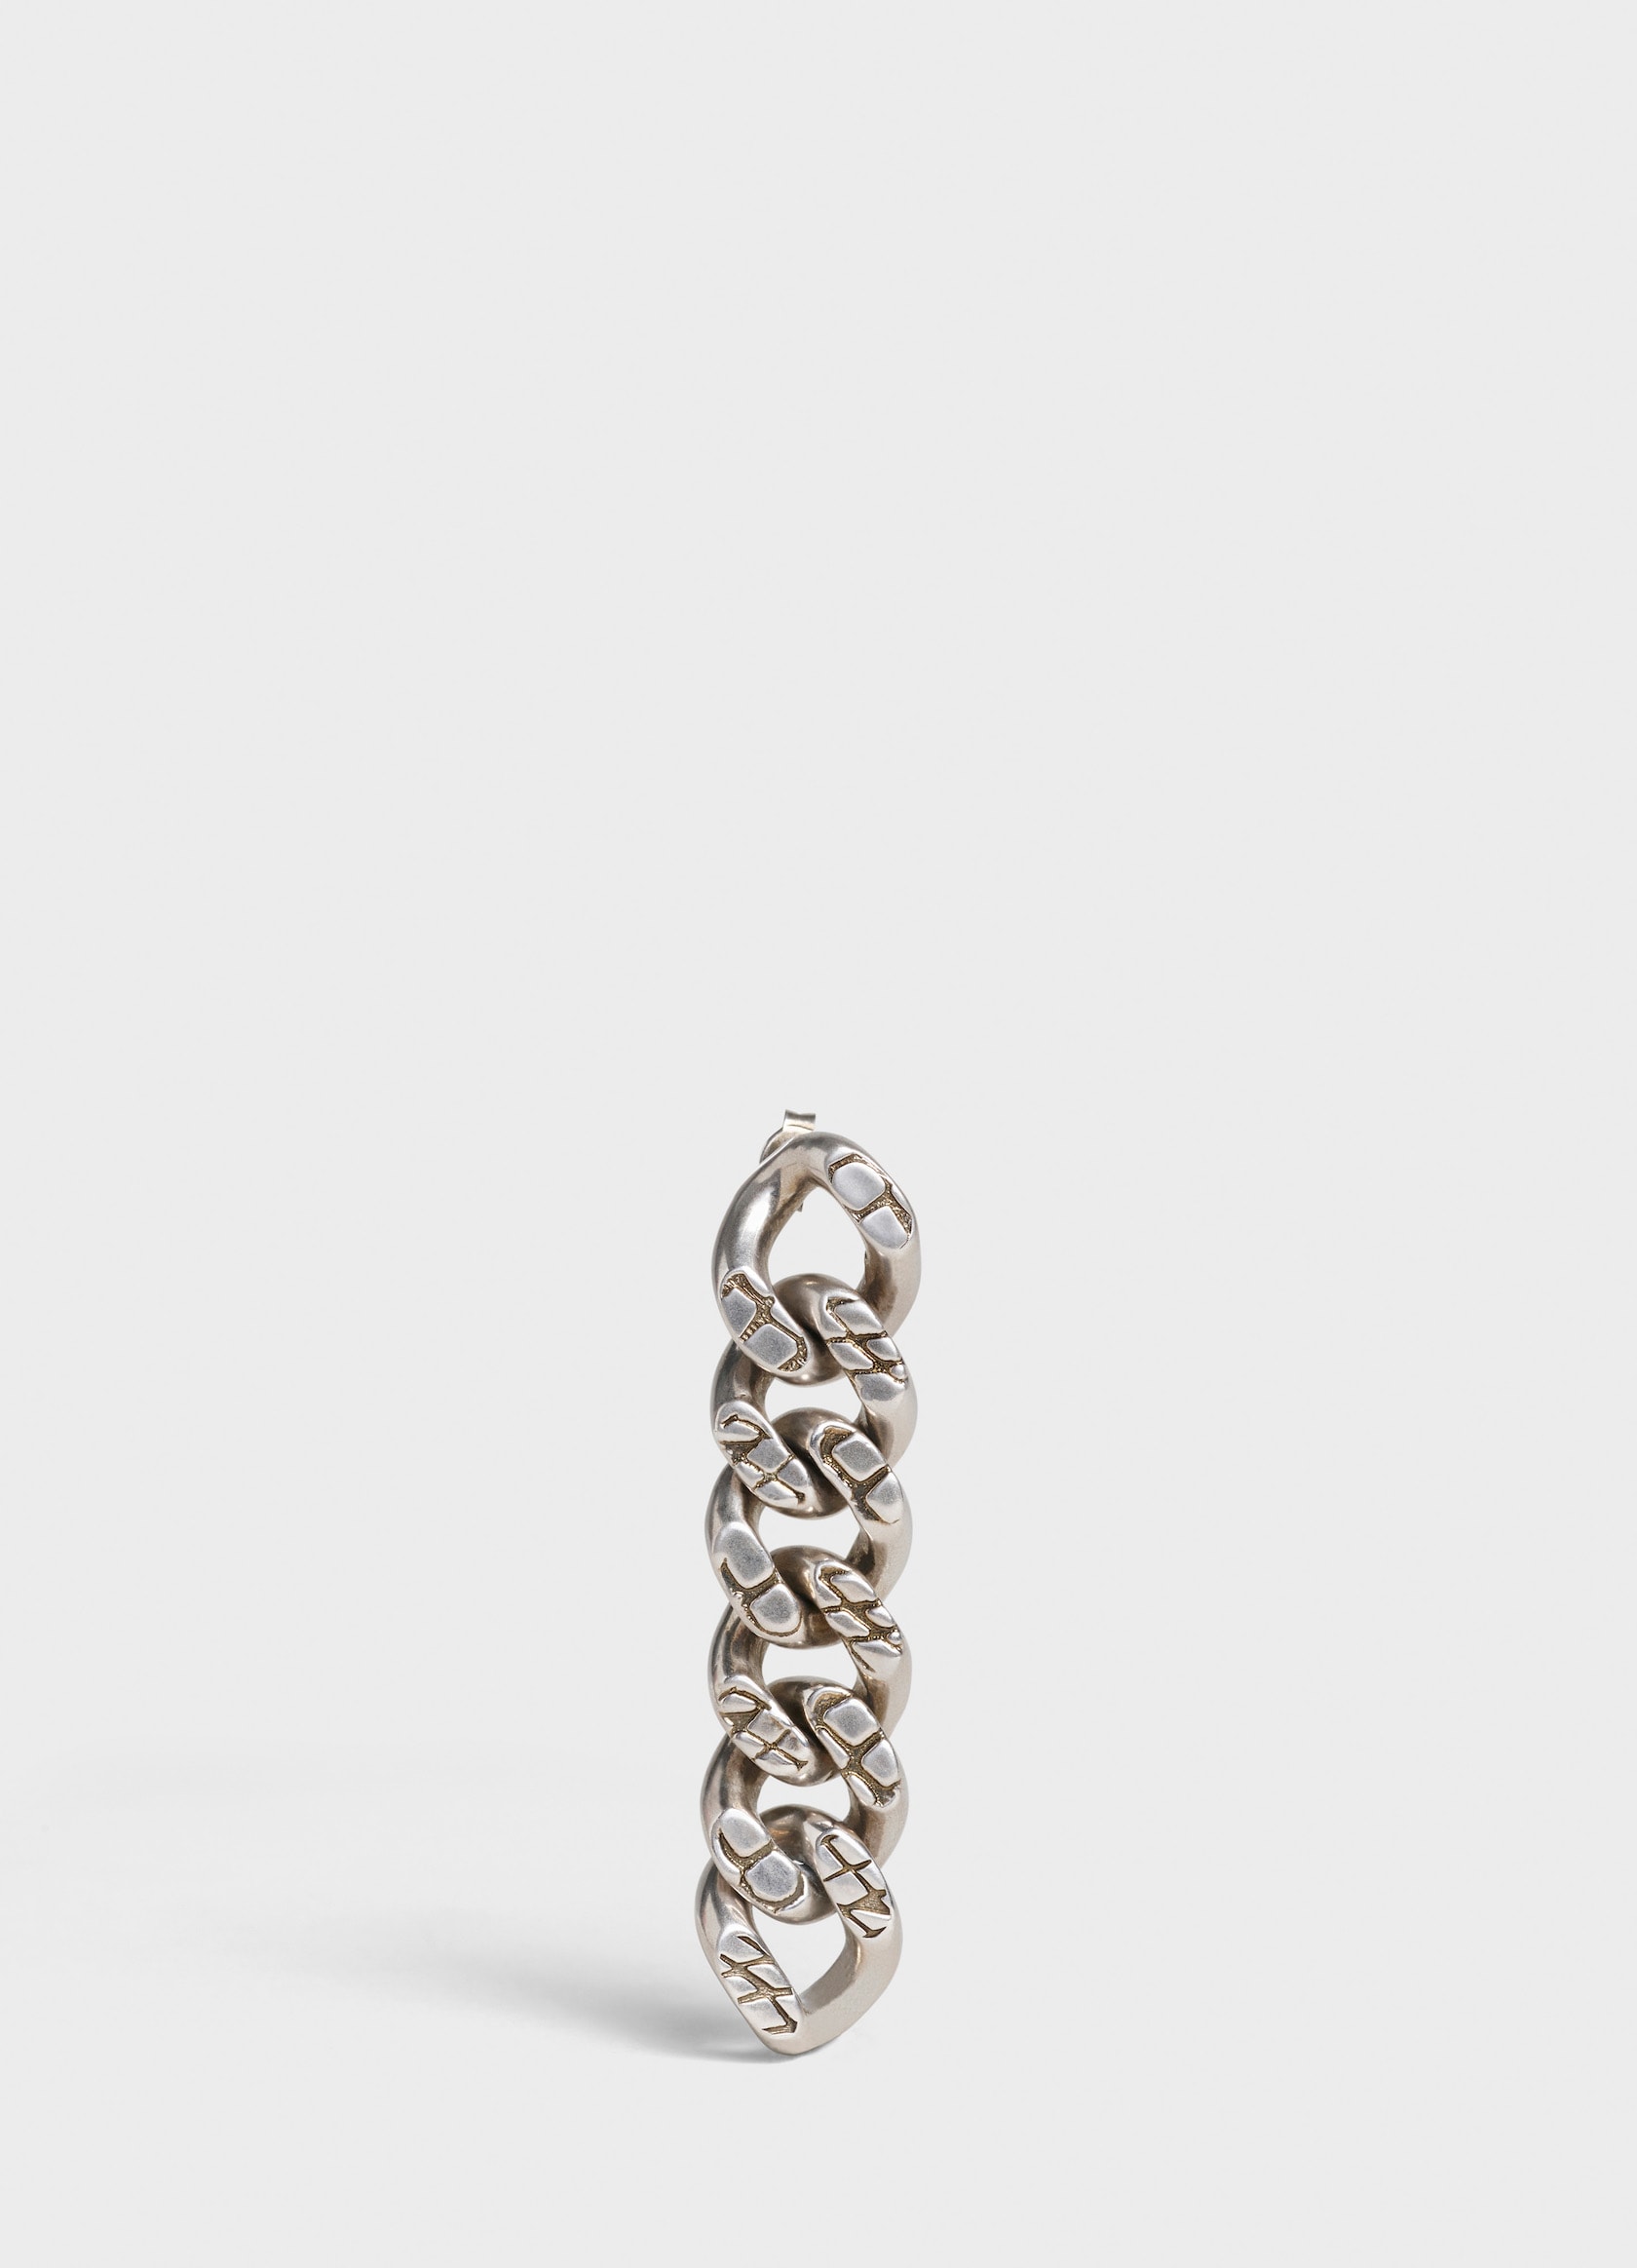  Celine Spring 2019 Jewelry Collection Lookbook Hedi Slimane Alphabet Necklace